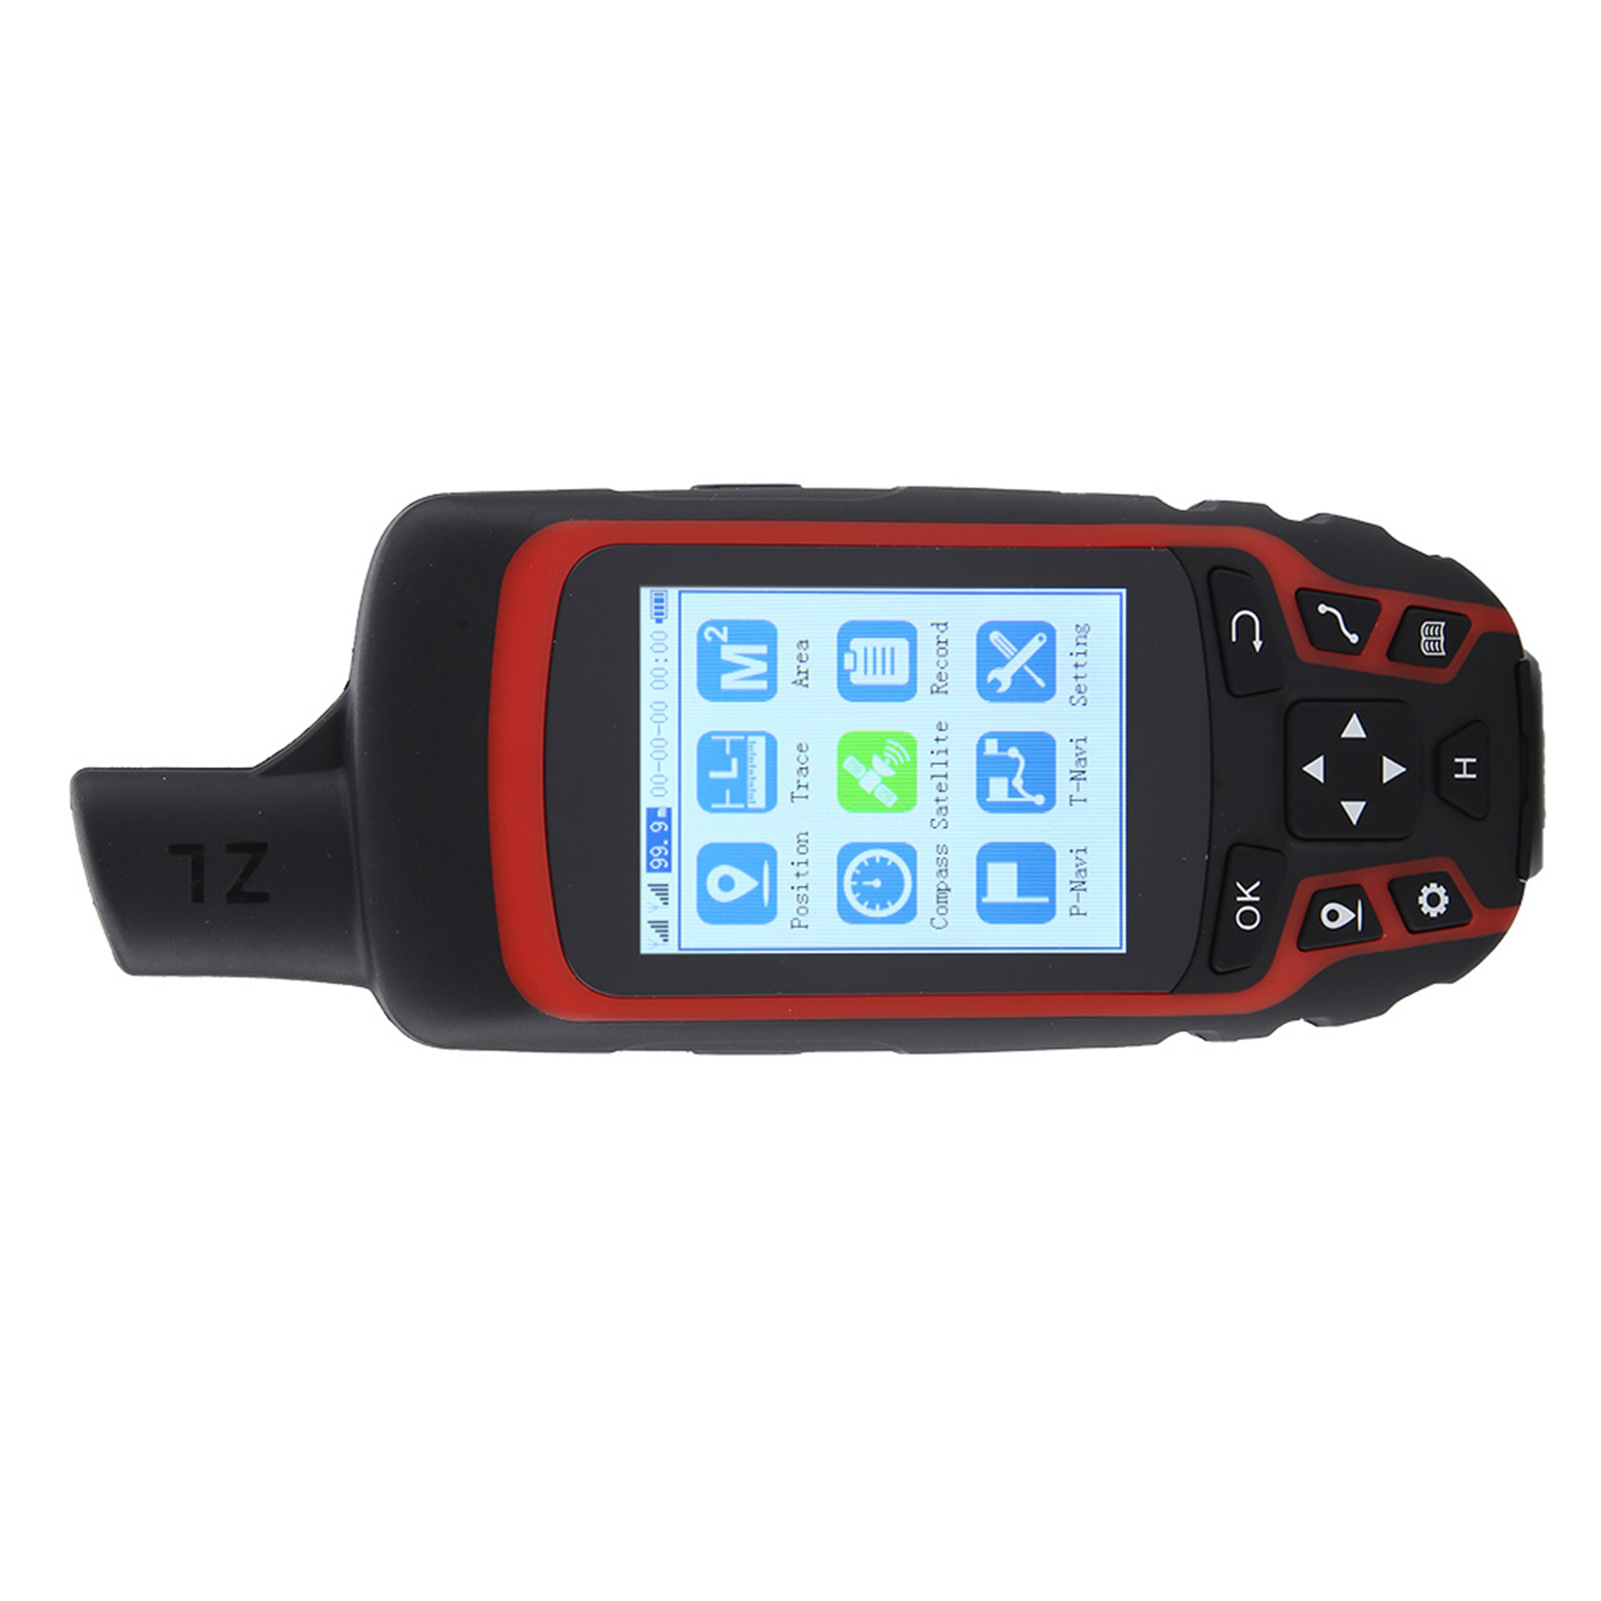 A6 Handheld GPS Navigation Compass Outdoor Location Tracker USB AC110V US Plug☚